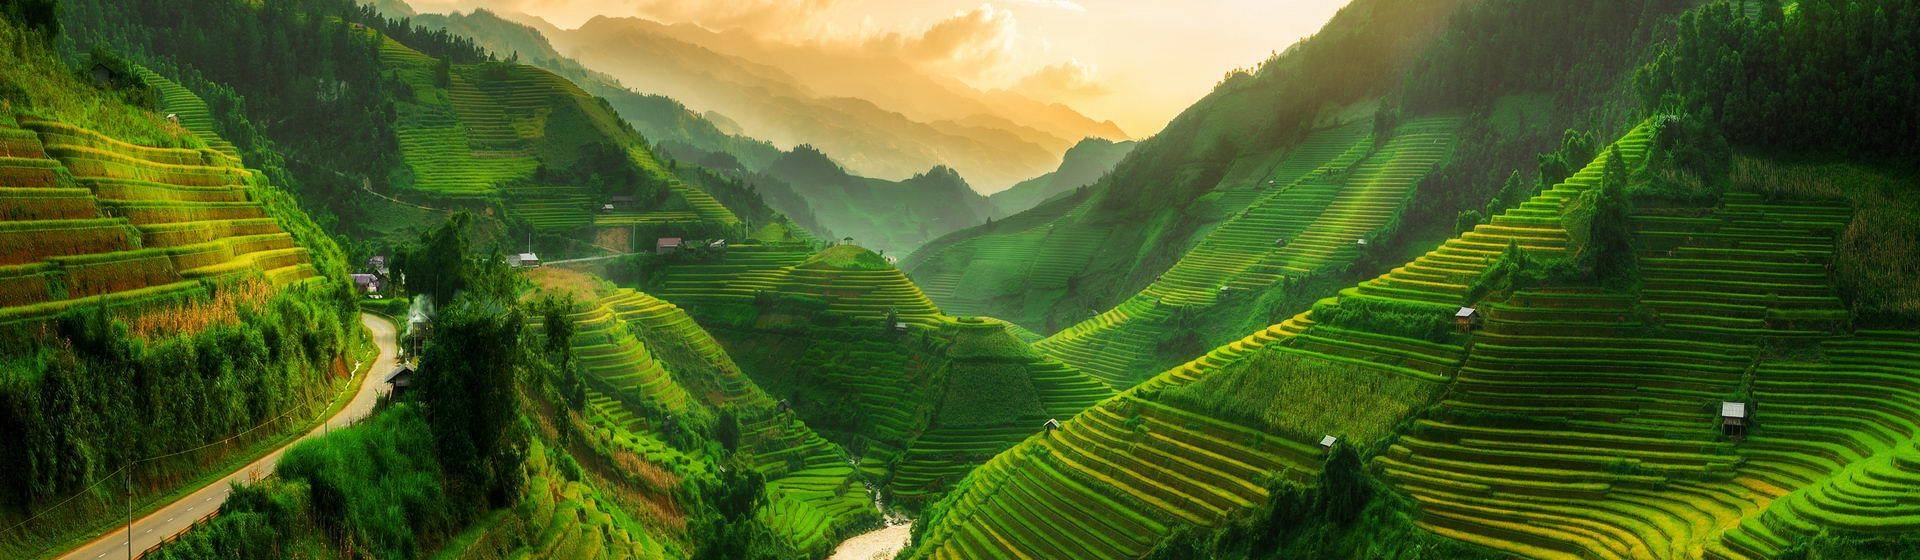 Holidays to Vietnam Image